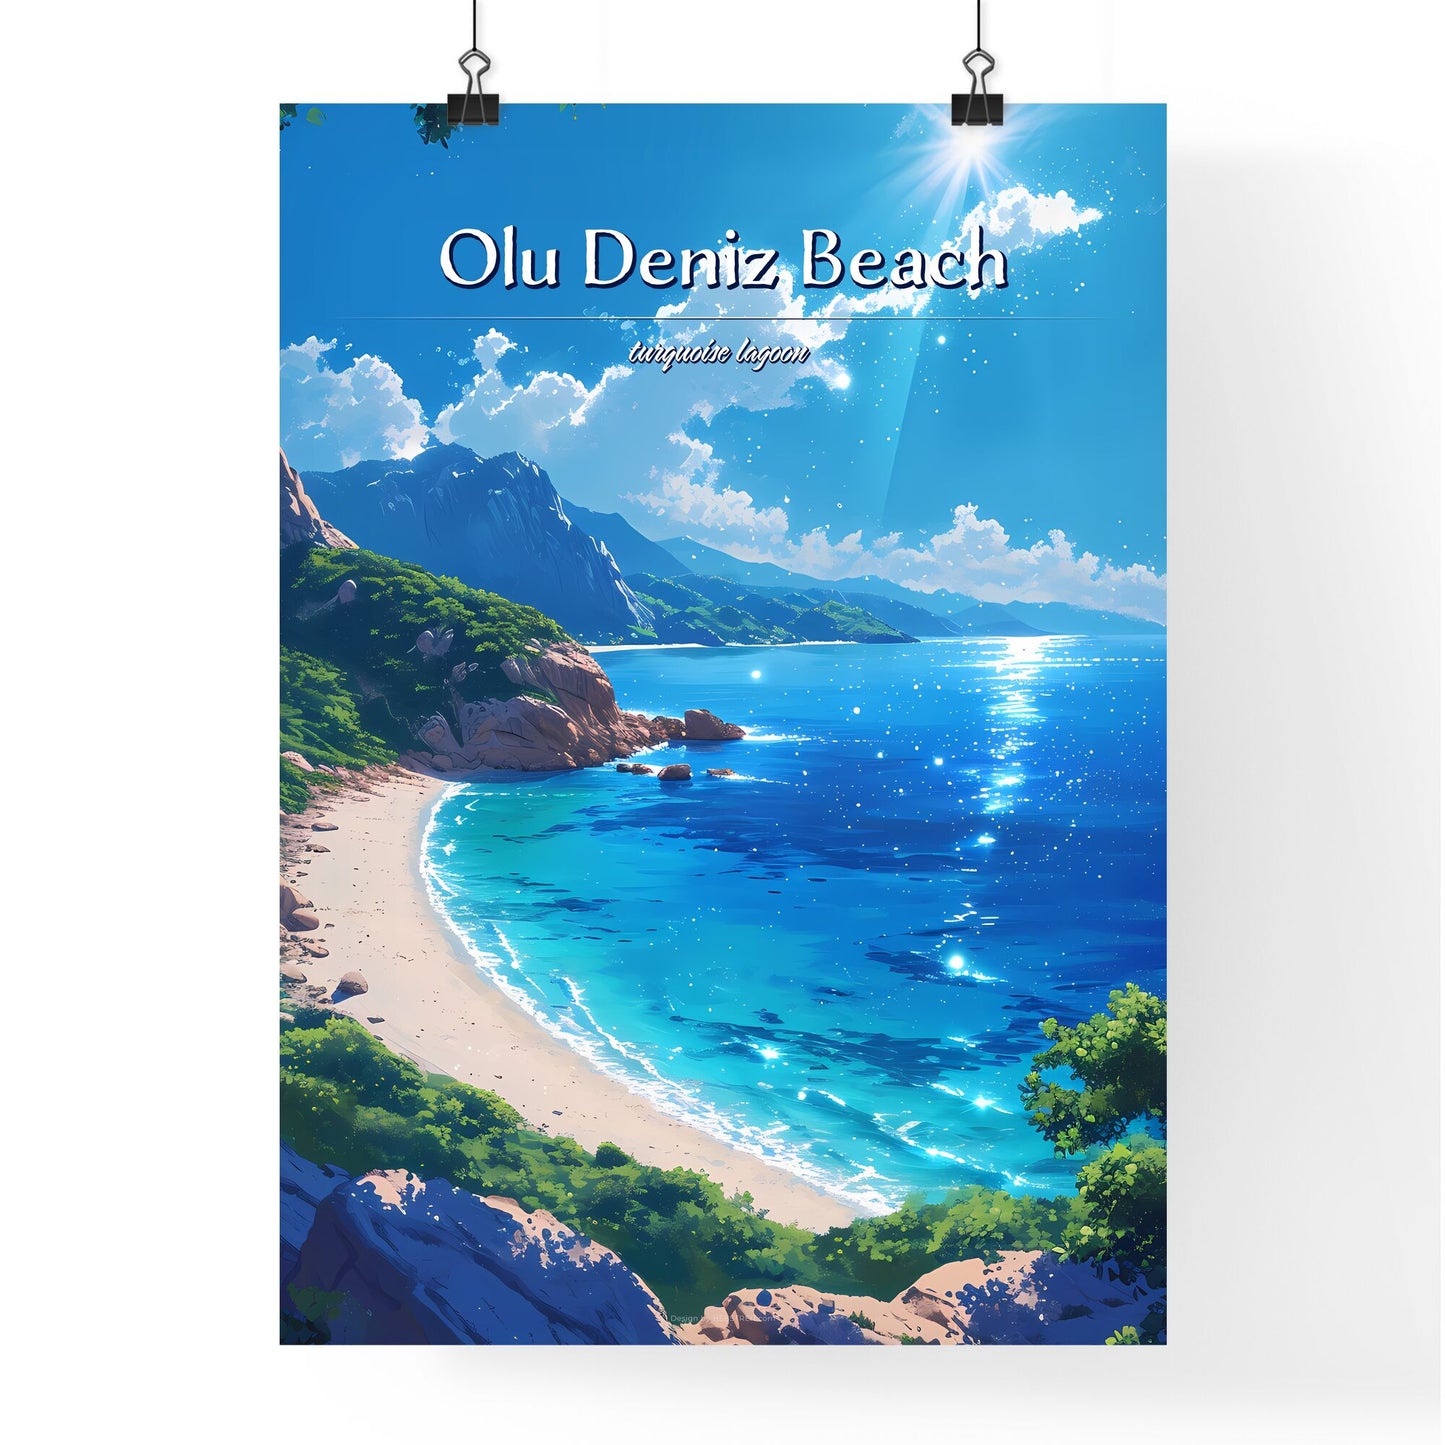 Olu Deniz Beach - Art print of a beach with trees and blue water Default Title